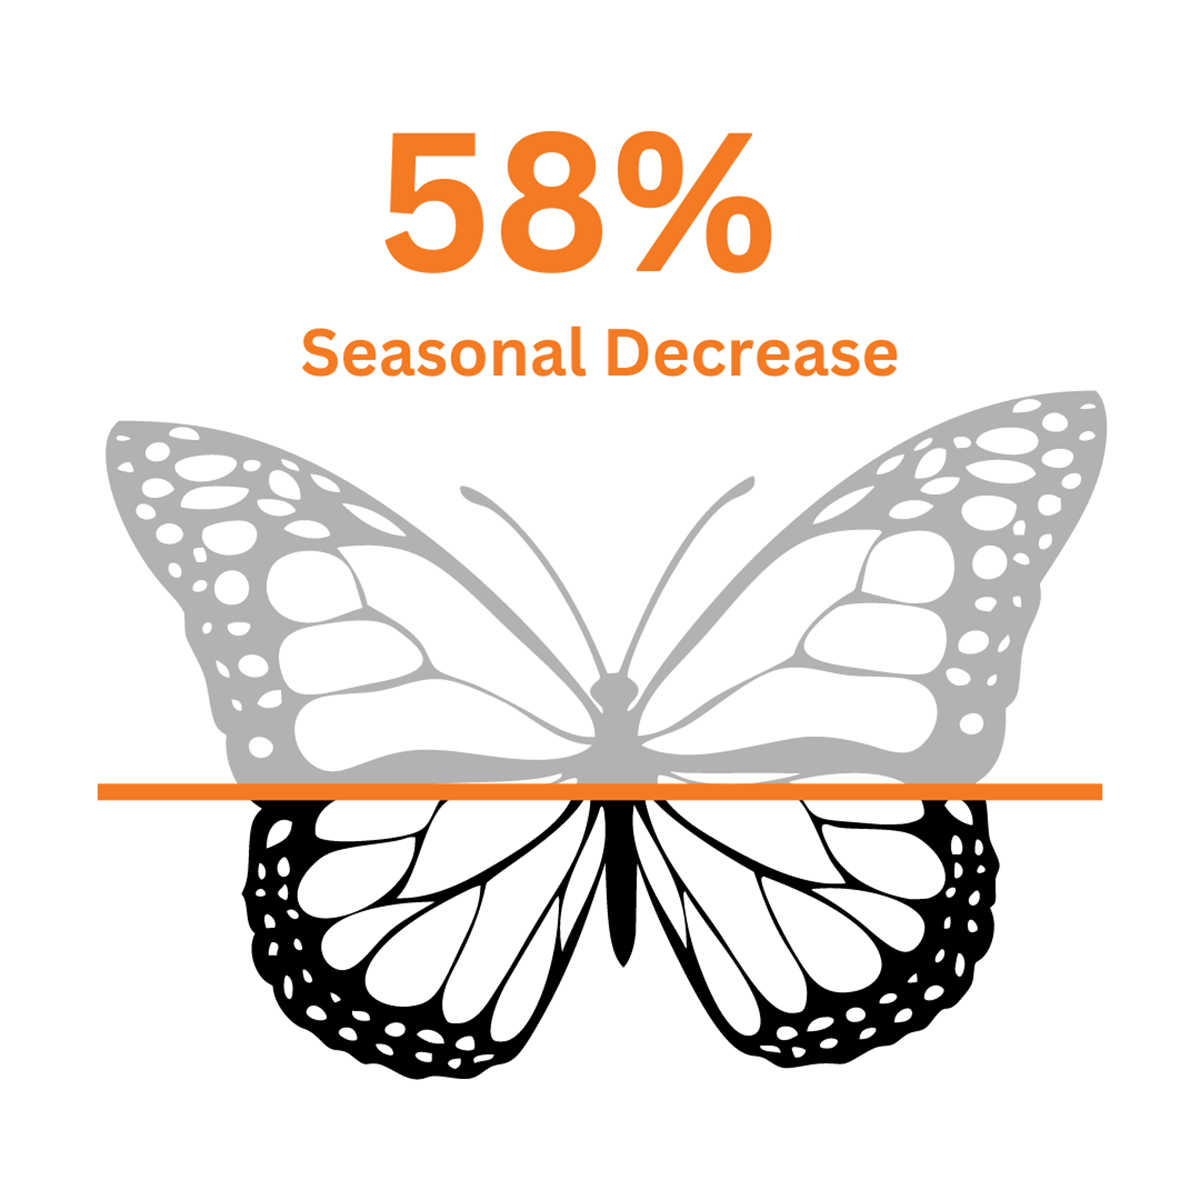 58% seasonal decrease